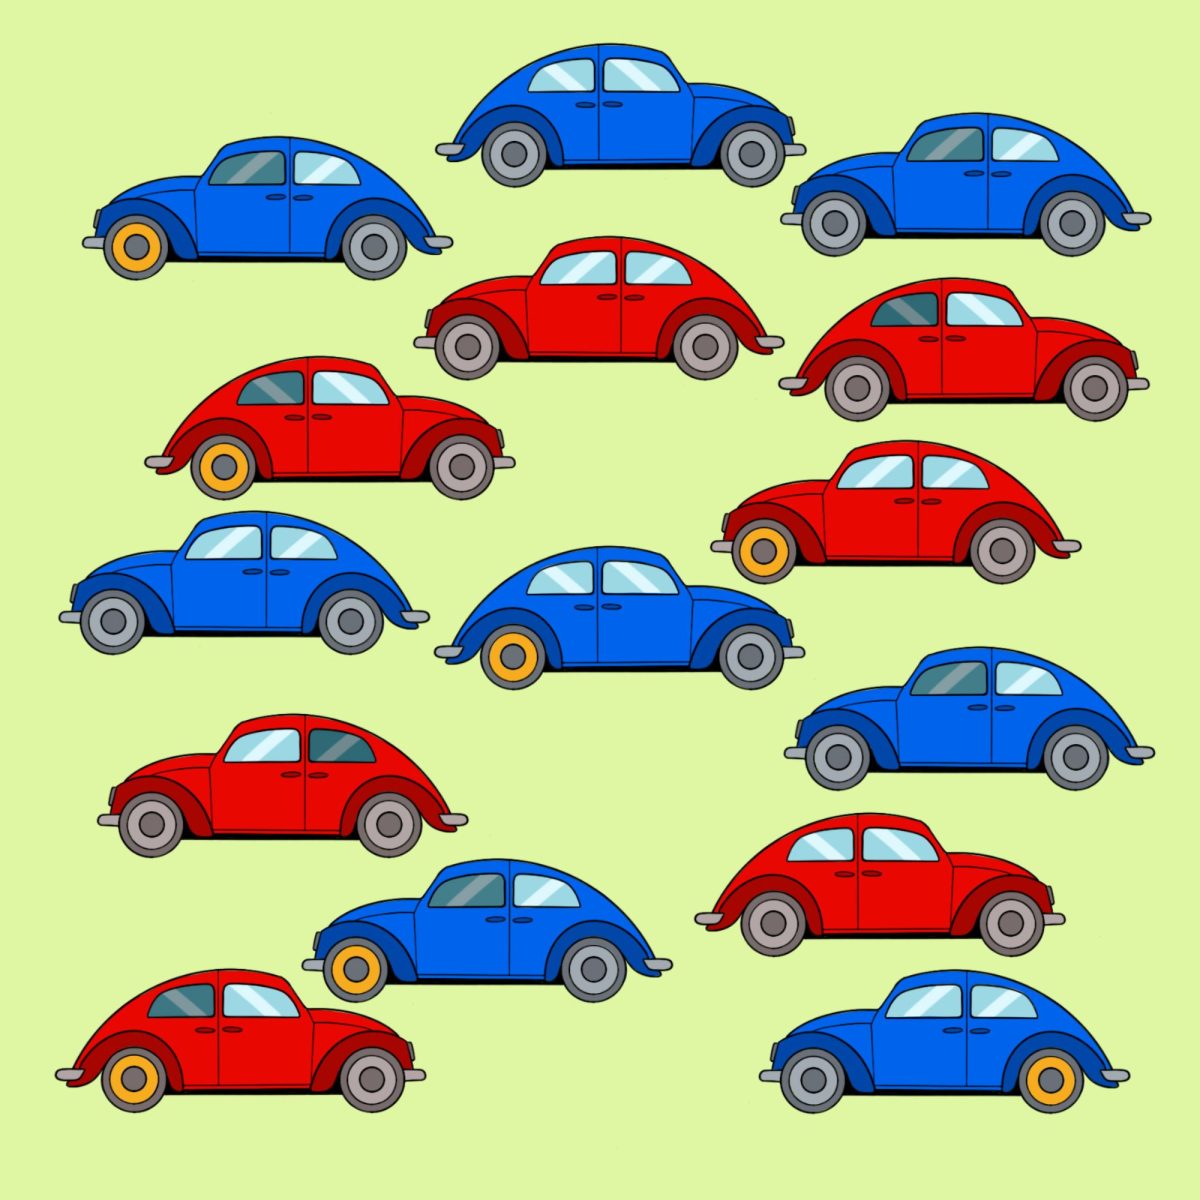 آزمون چالشی یافتن اتومبیل متفاوت تصویر اصلی